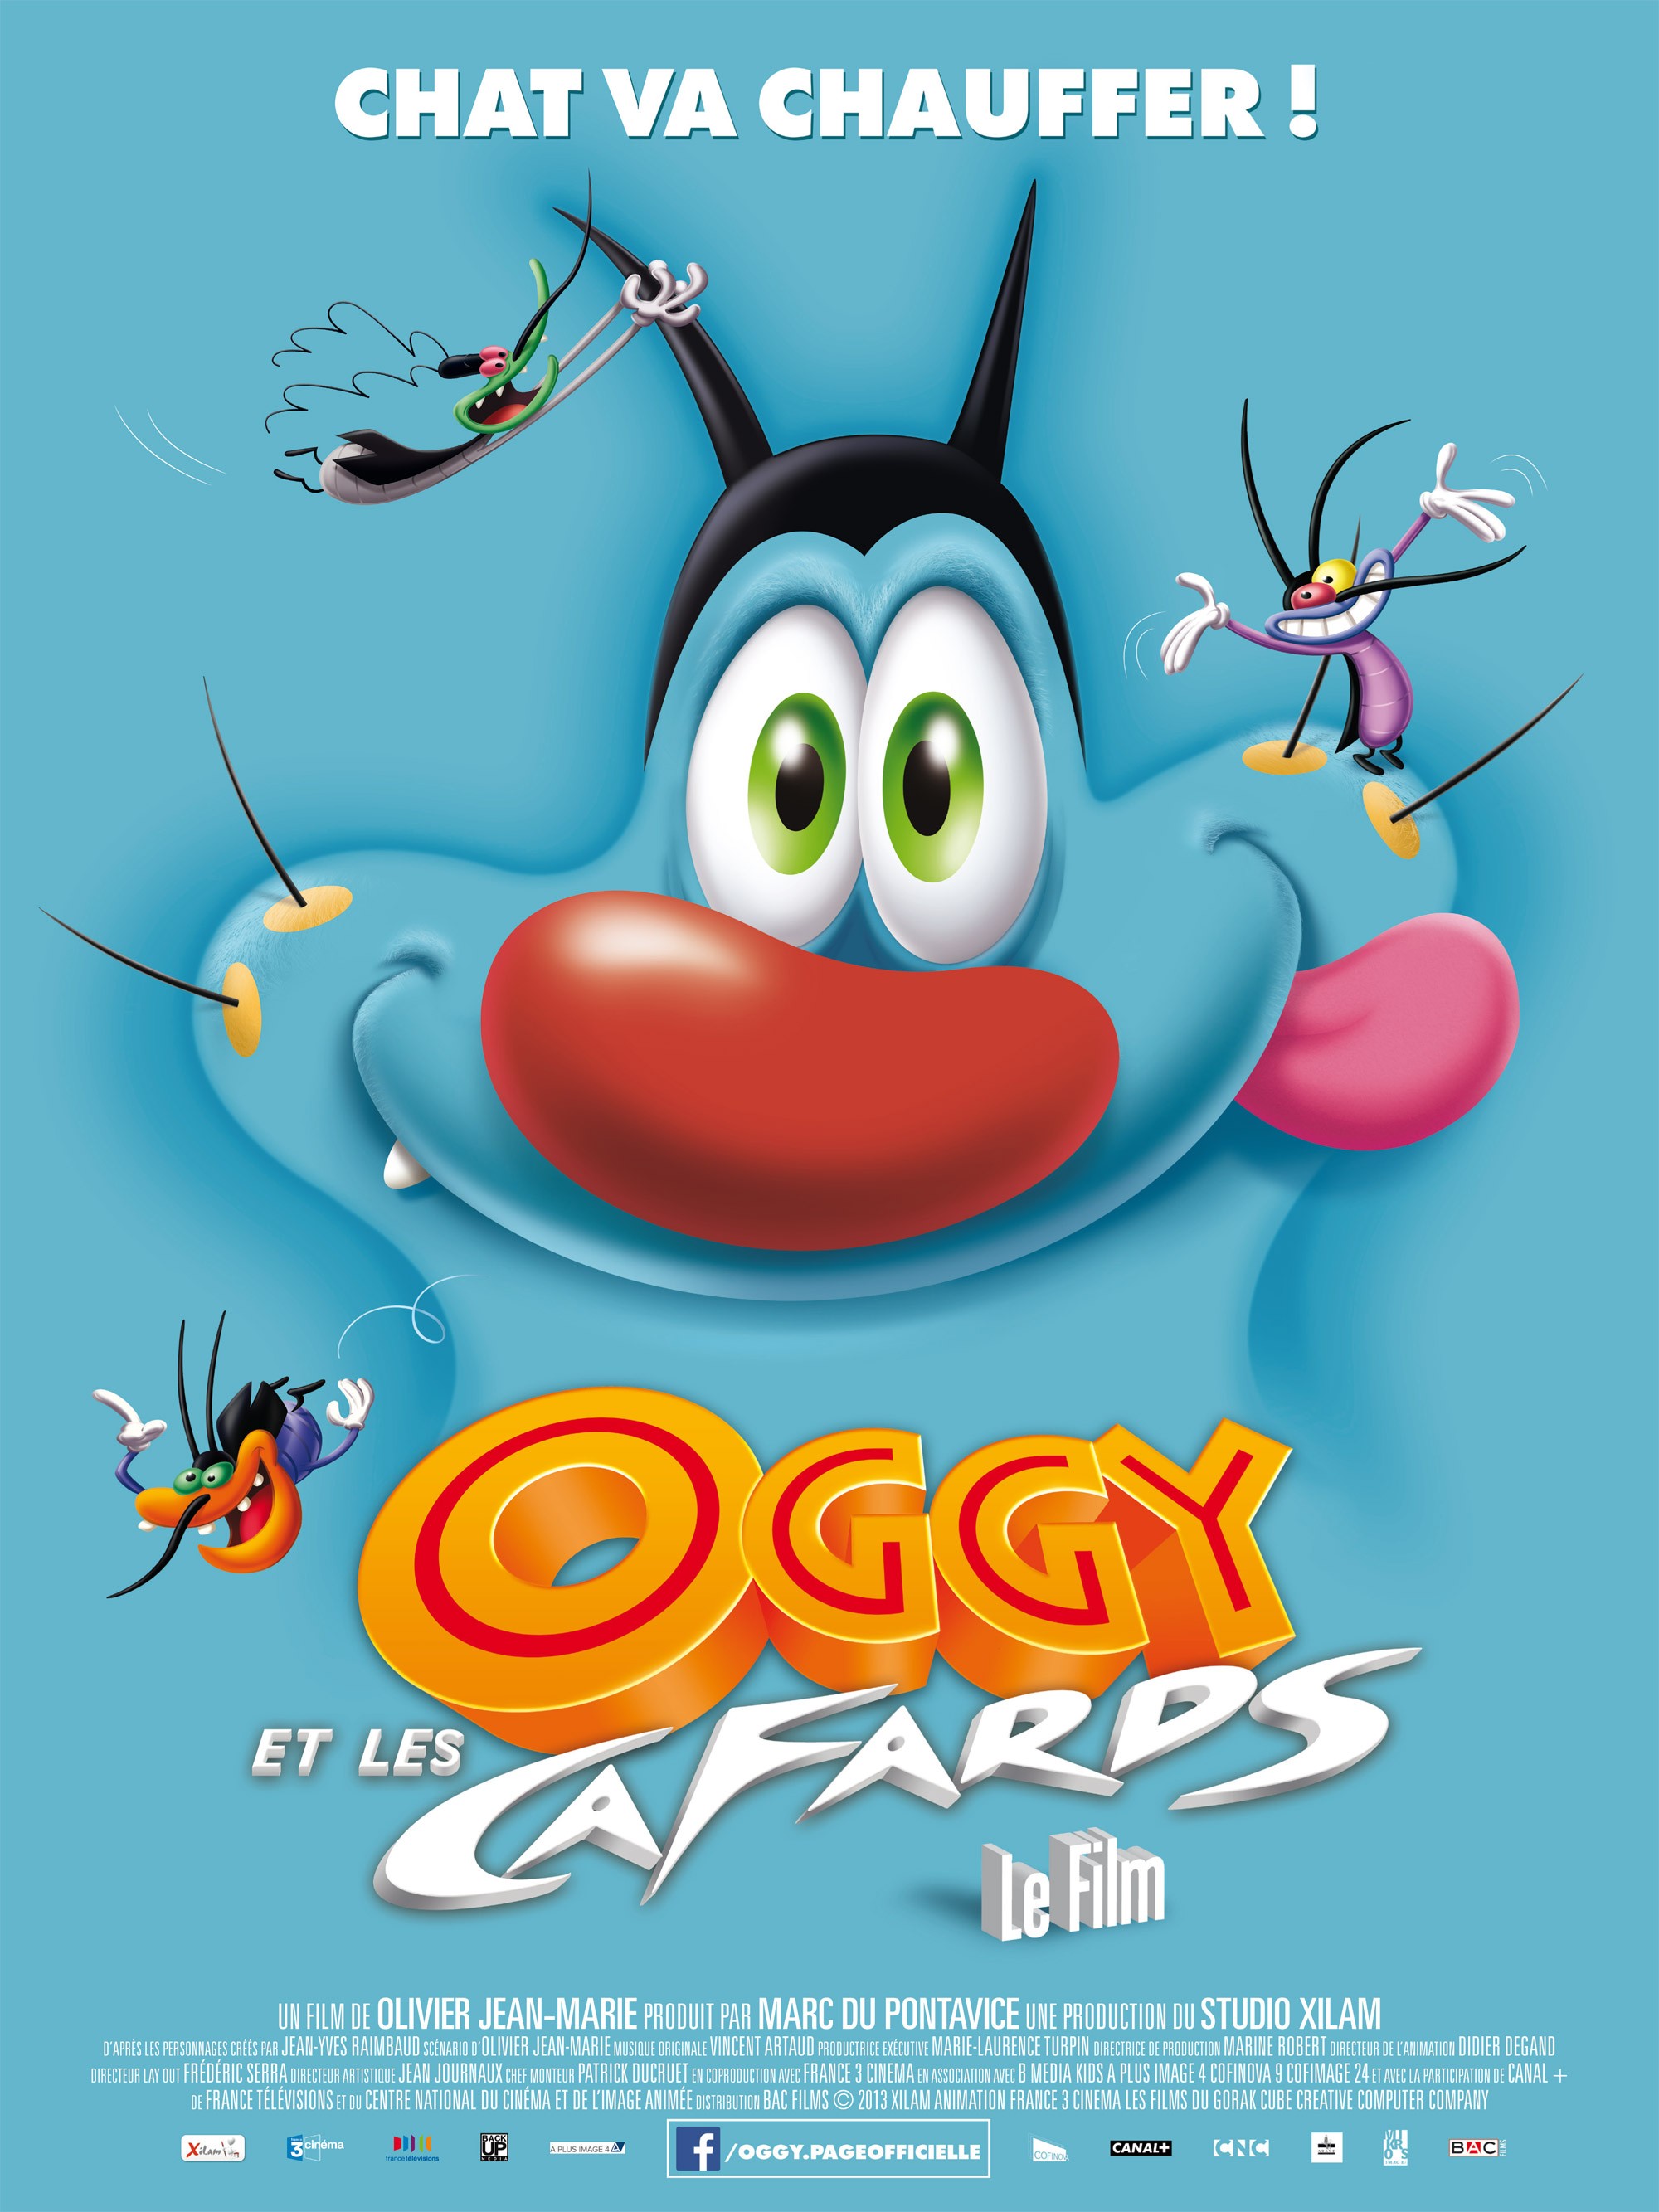 Mega Sized Movie Poster Image for Oggy et les cafards 